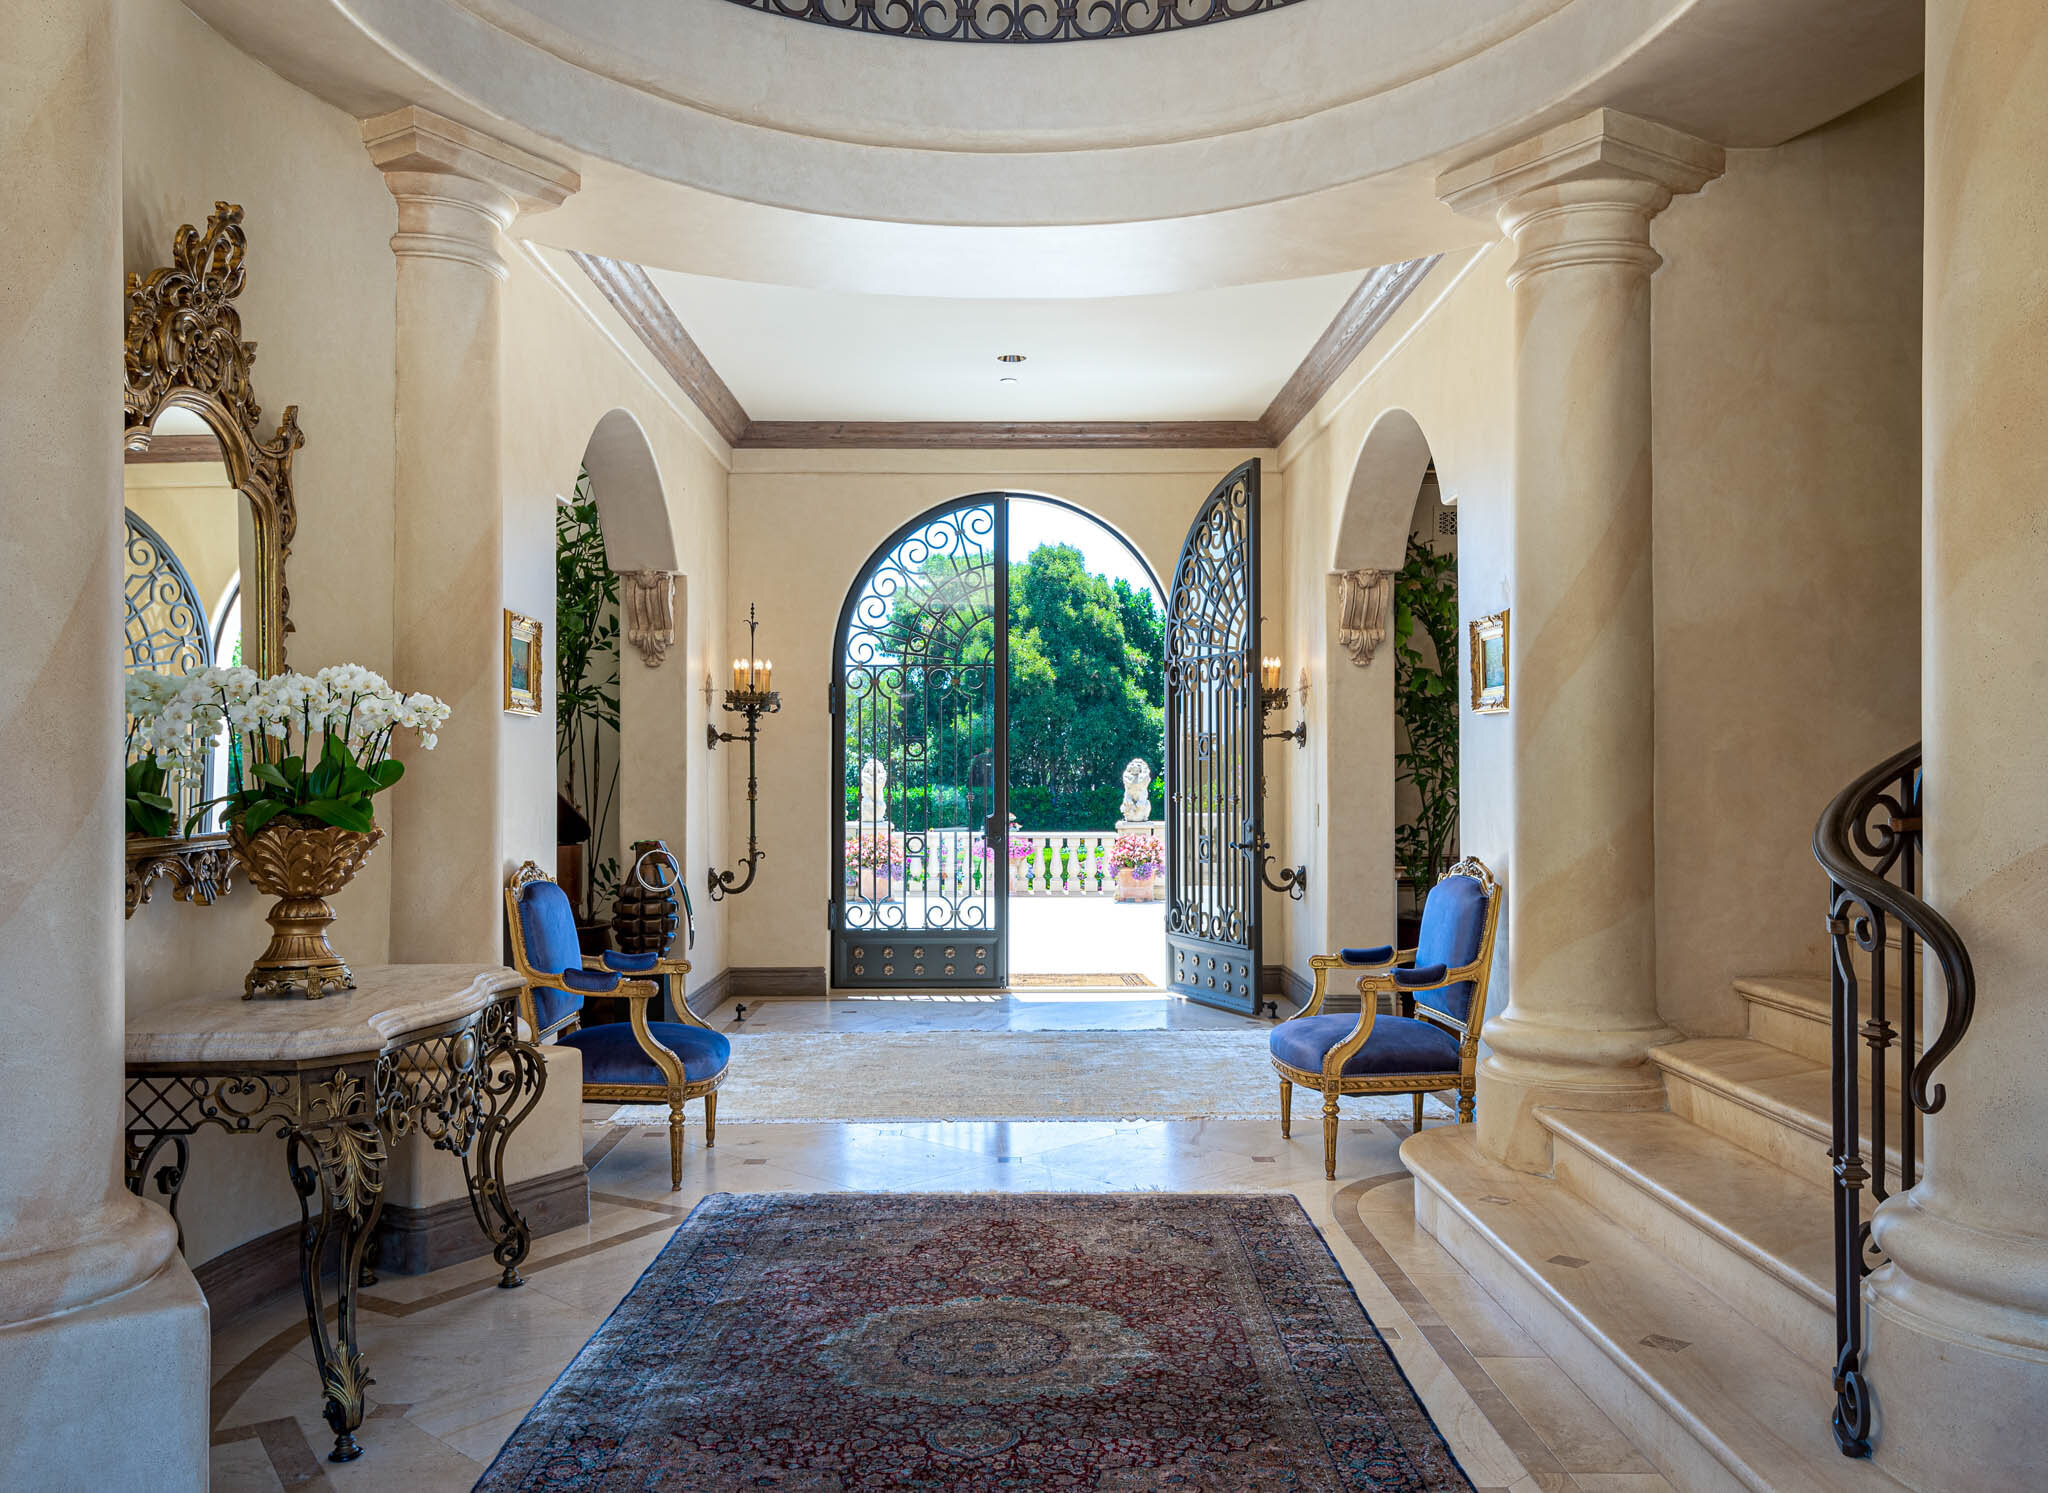 Francis York Casa Leo Linda, a Montecito Mediterranean Mansion46.jpg